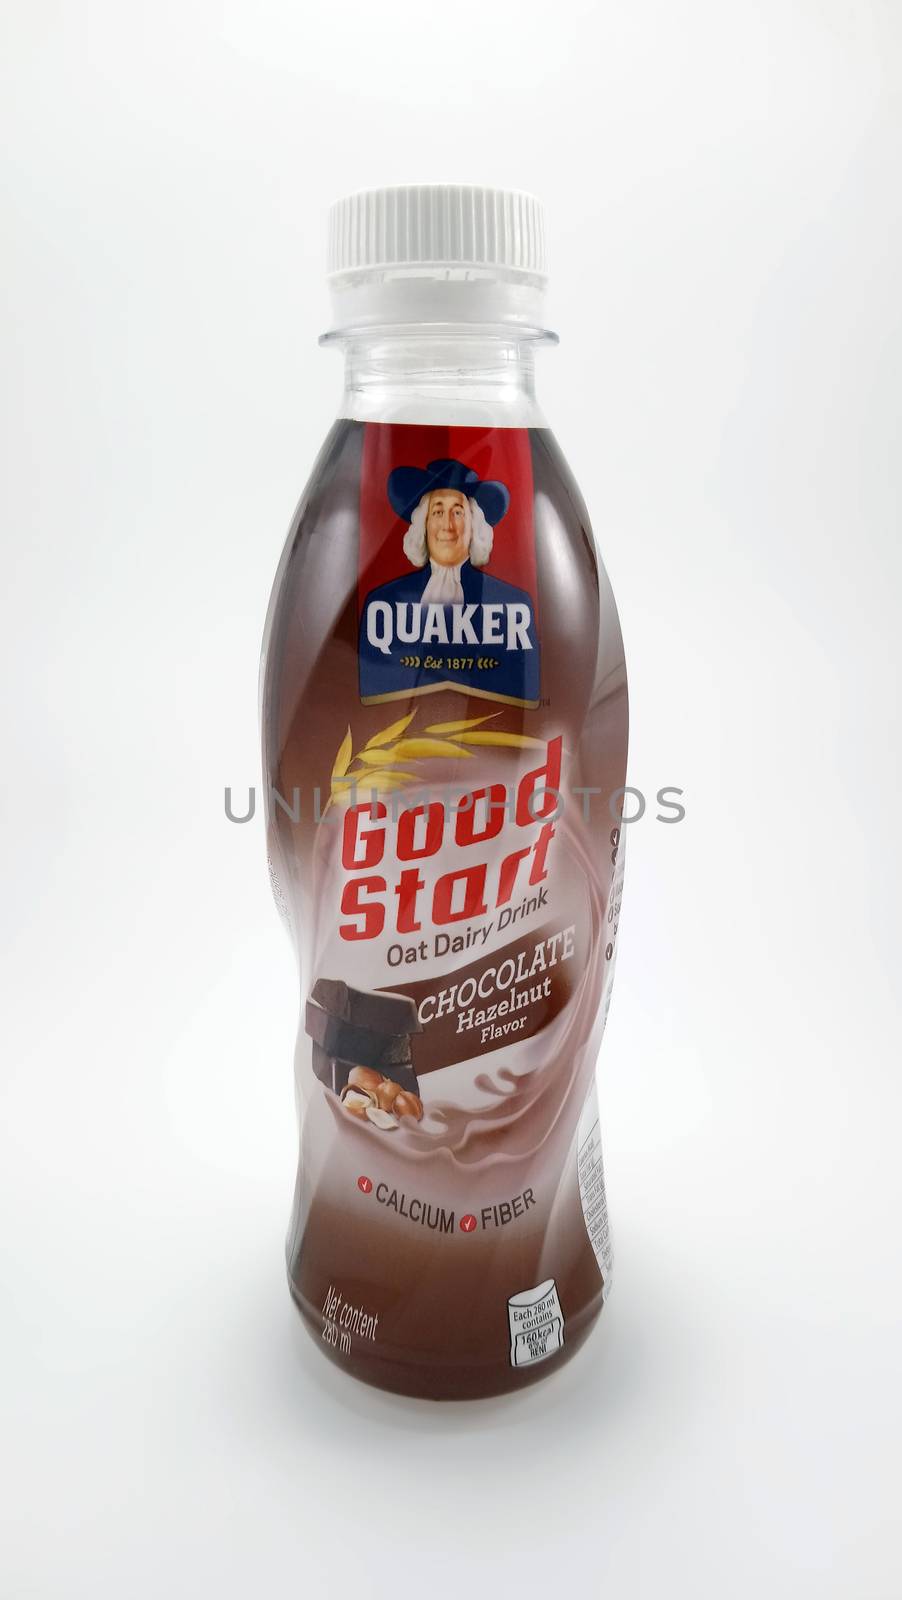 Quaker good start oat dairy drink chocolate hazelnut flavor bott by imwaltersy